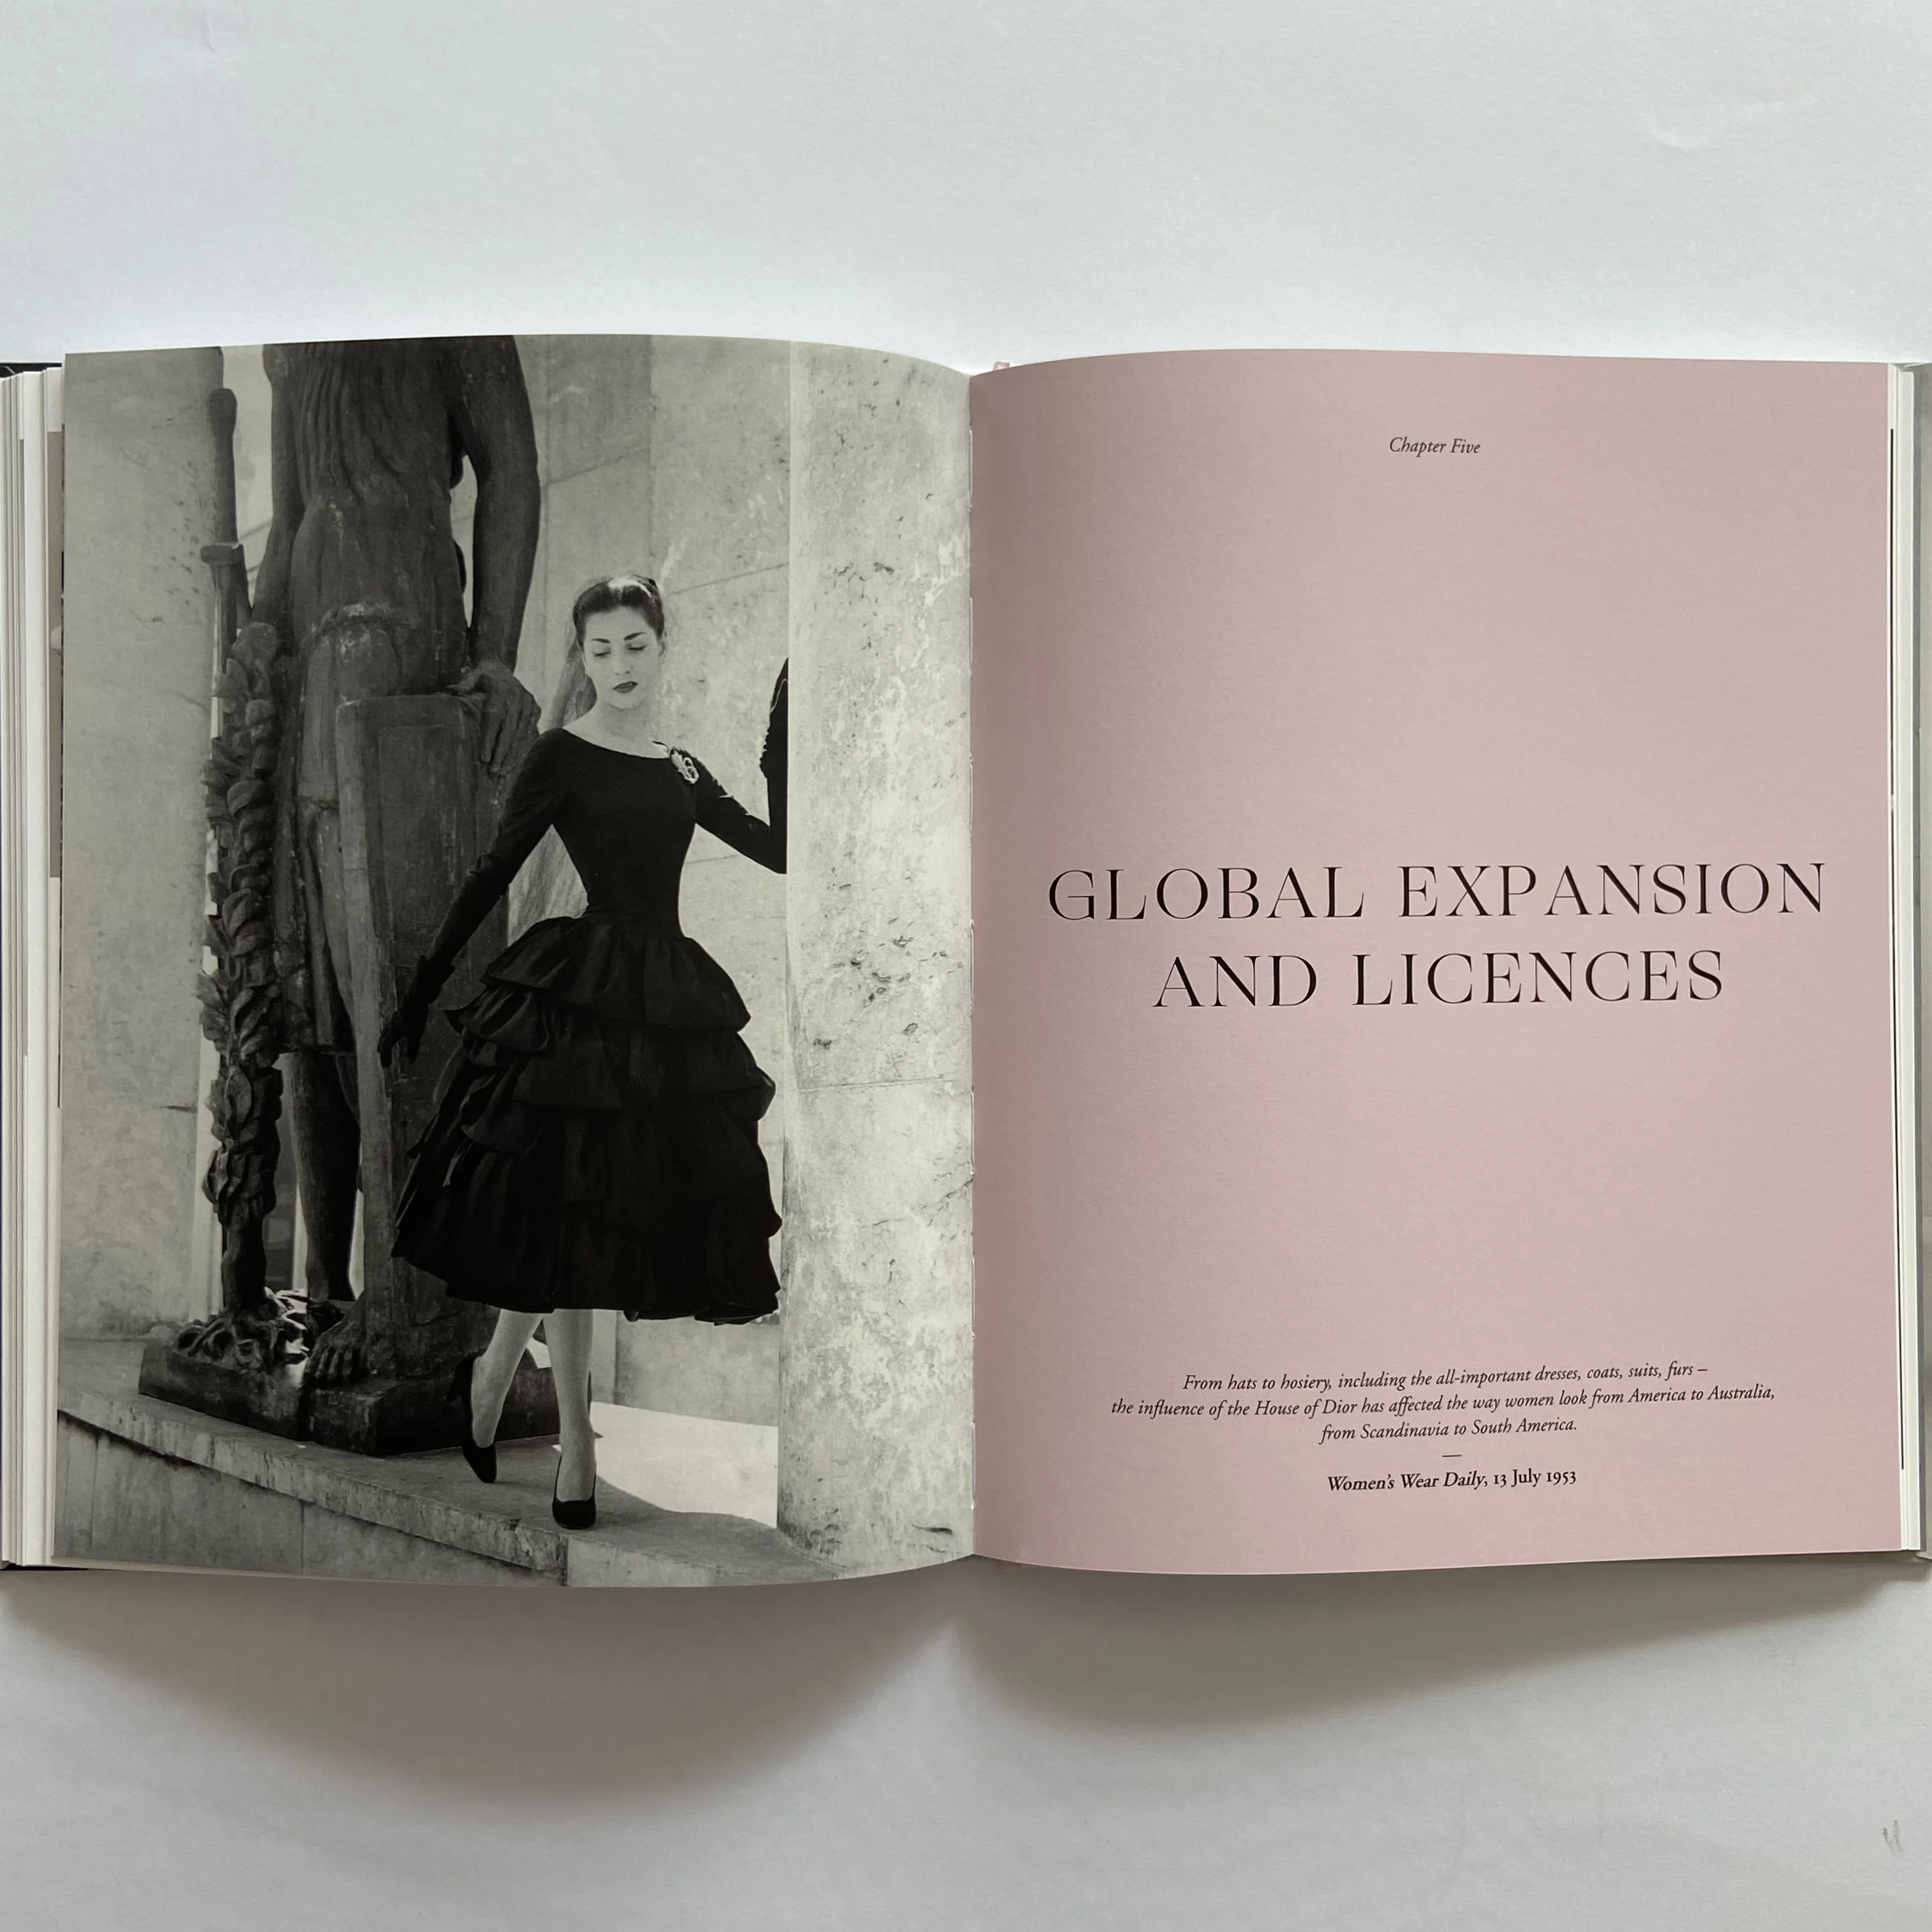 Dior: A New Look, A New Enterprise (1947–57)